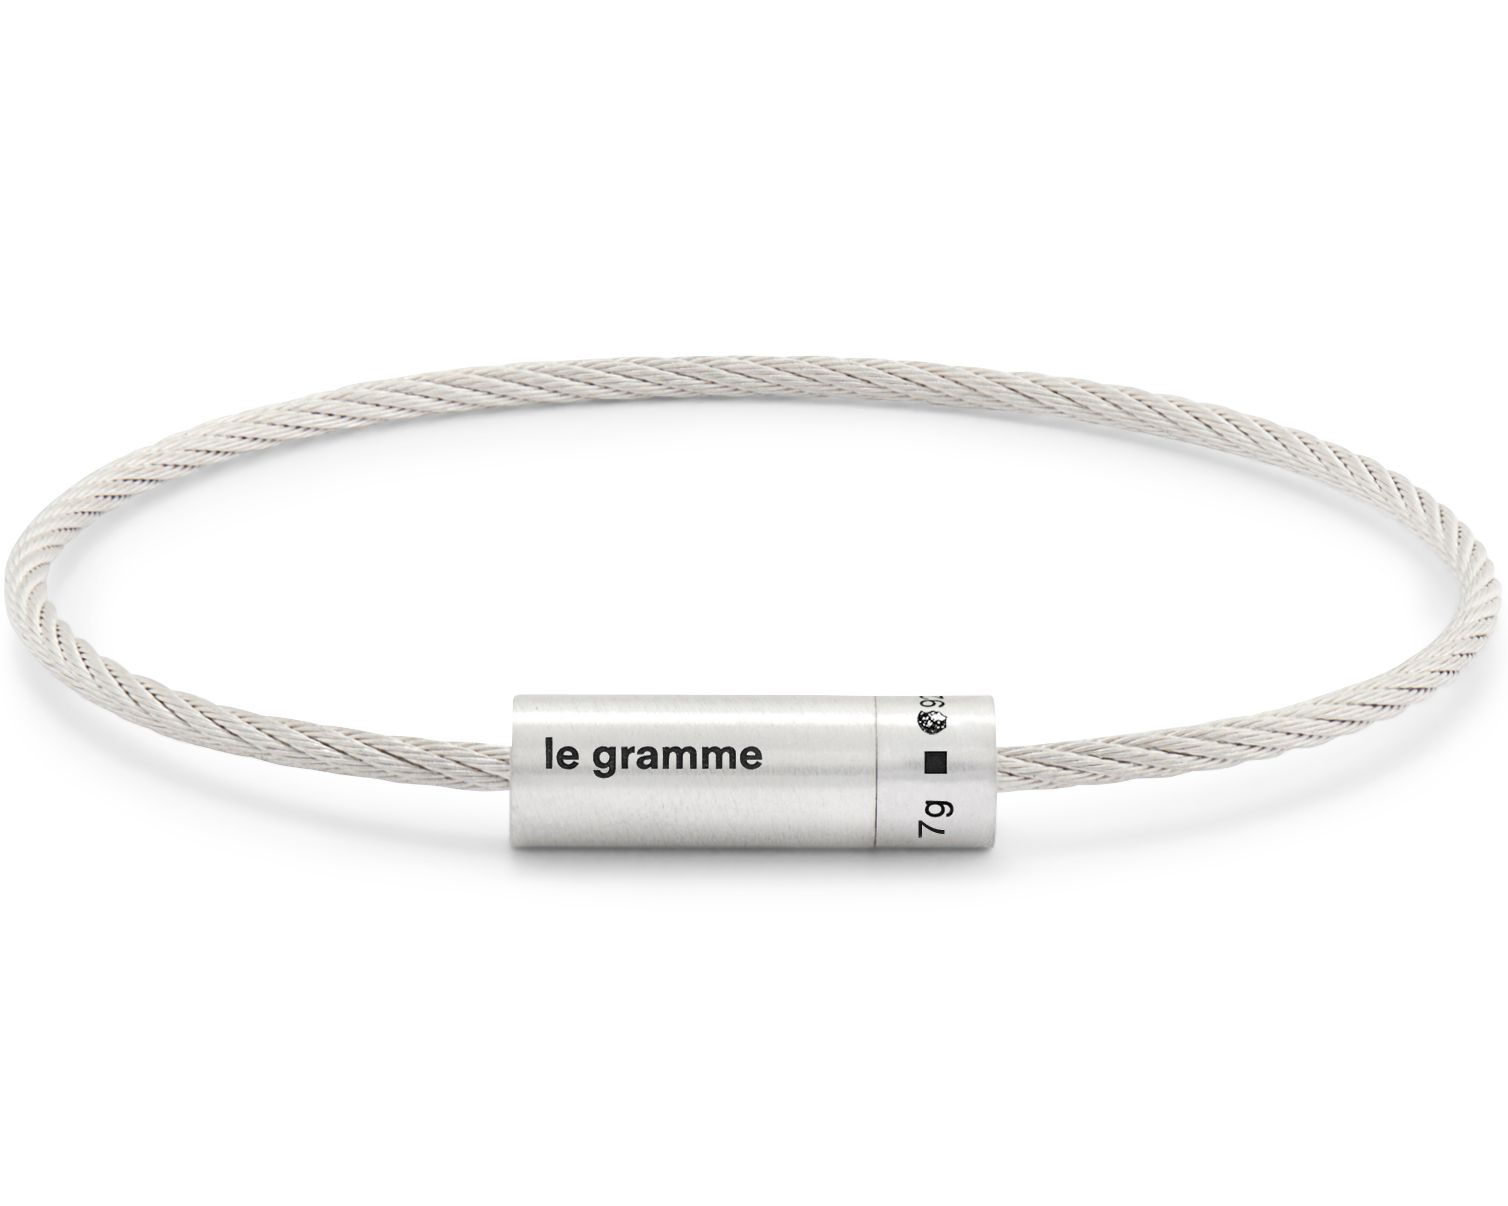 Le gramme - 【ラスト1点】cable bracelet le 7g(SLICK BLUSHED SILVER